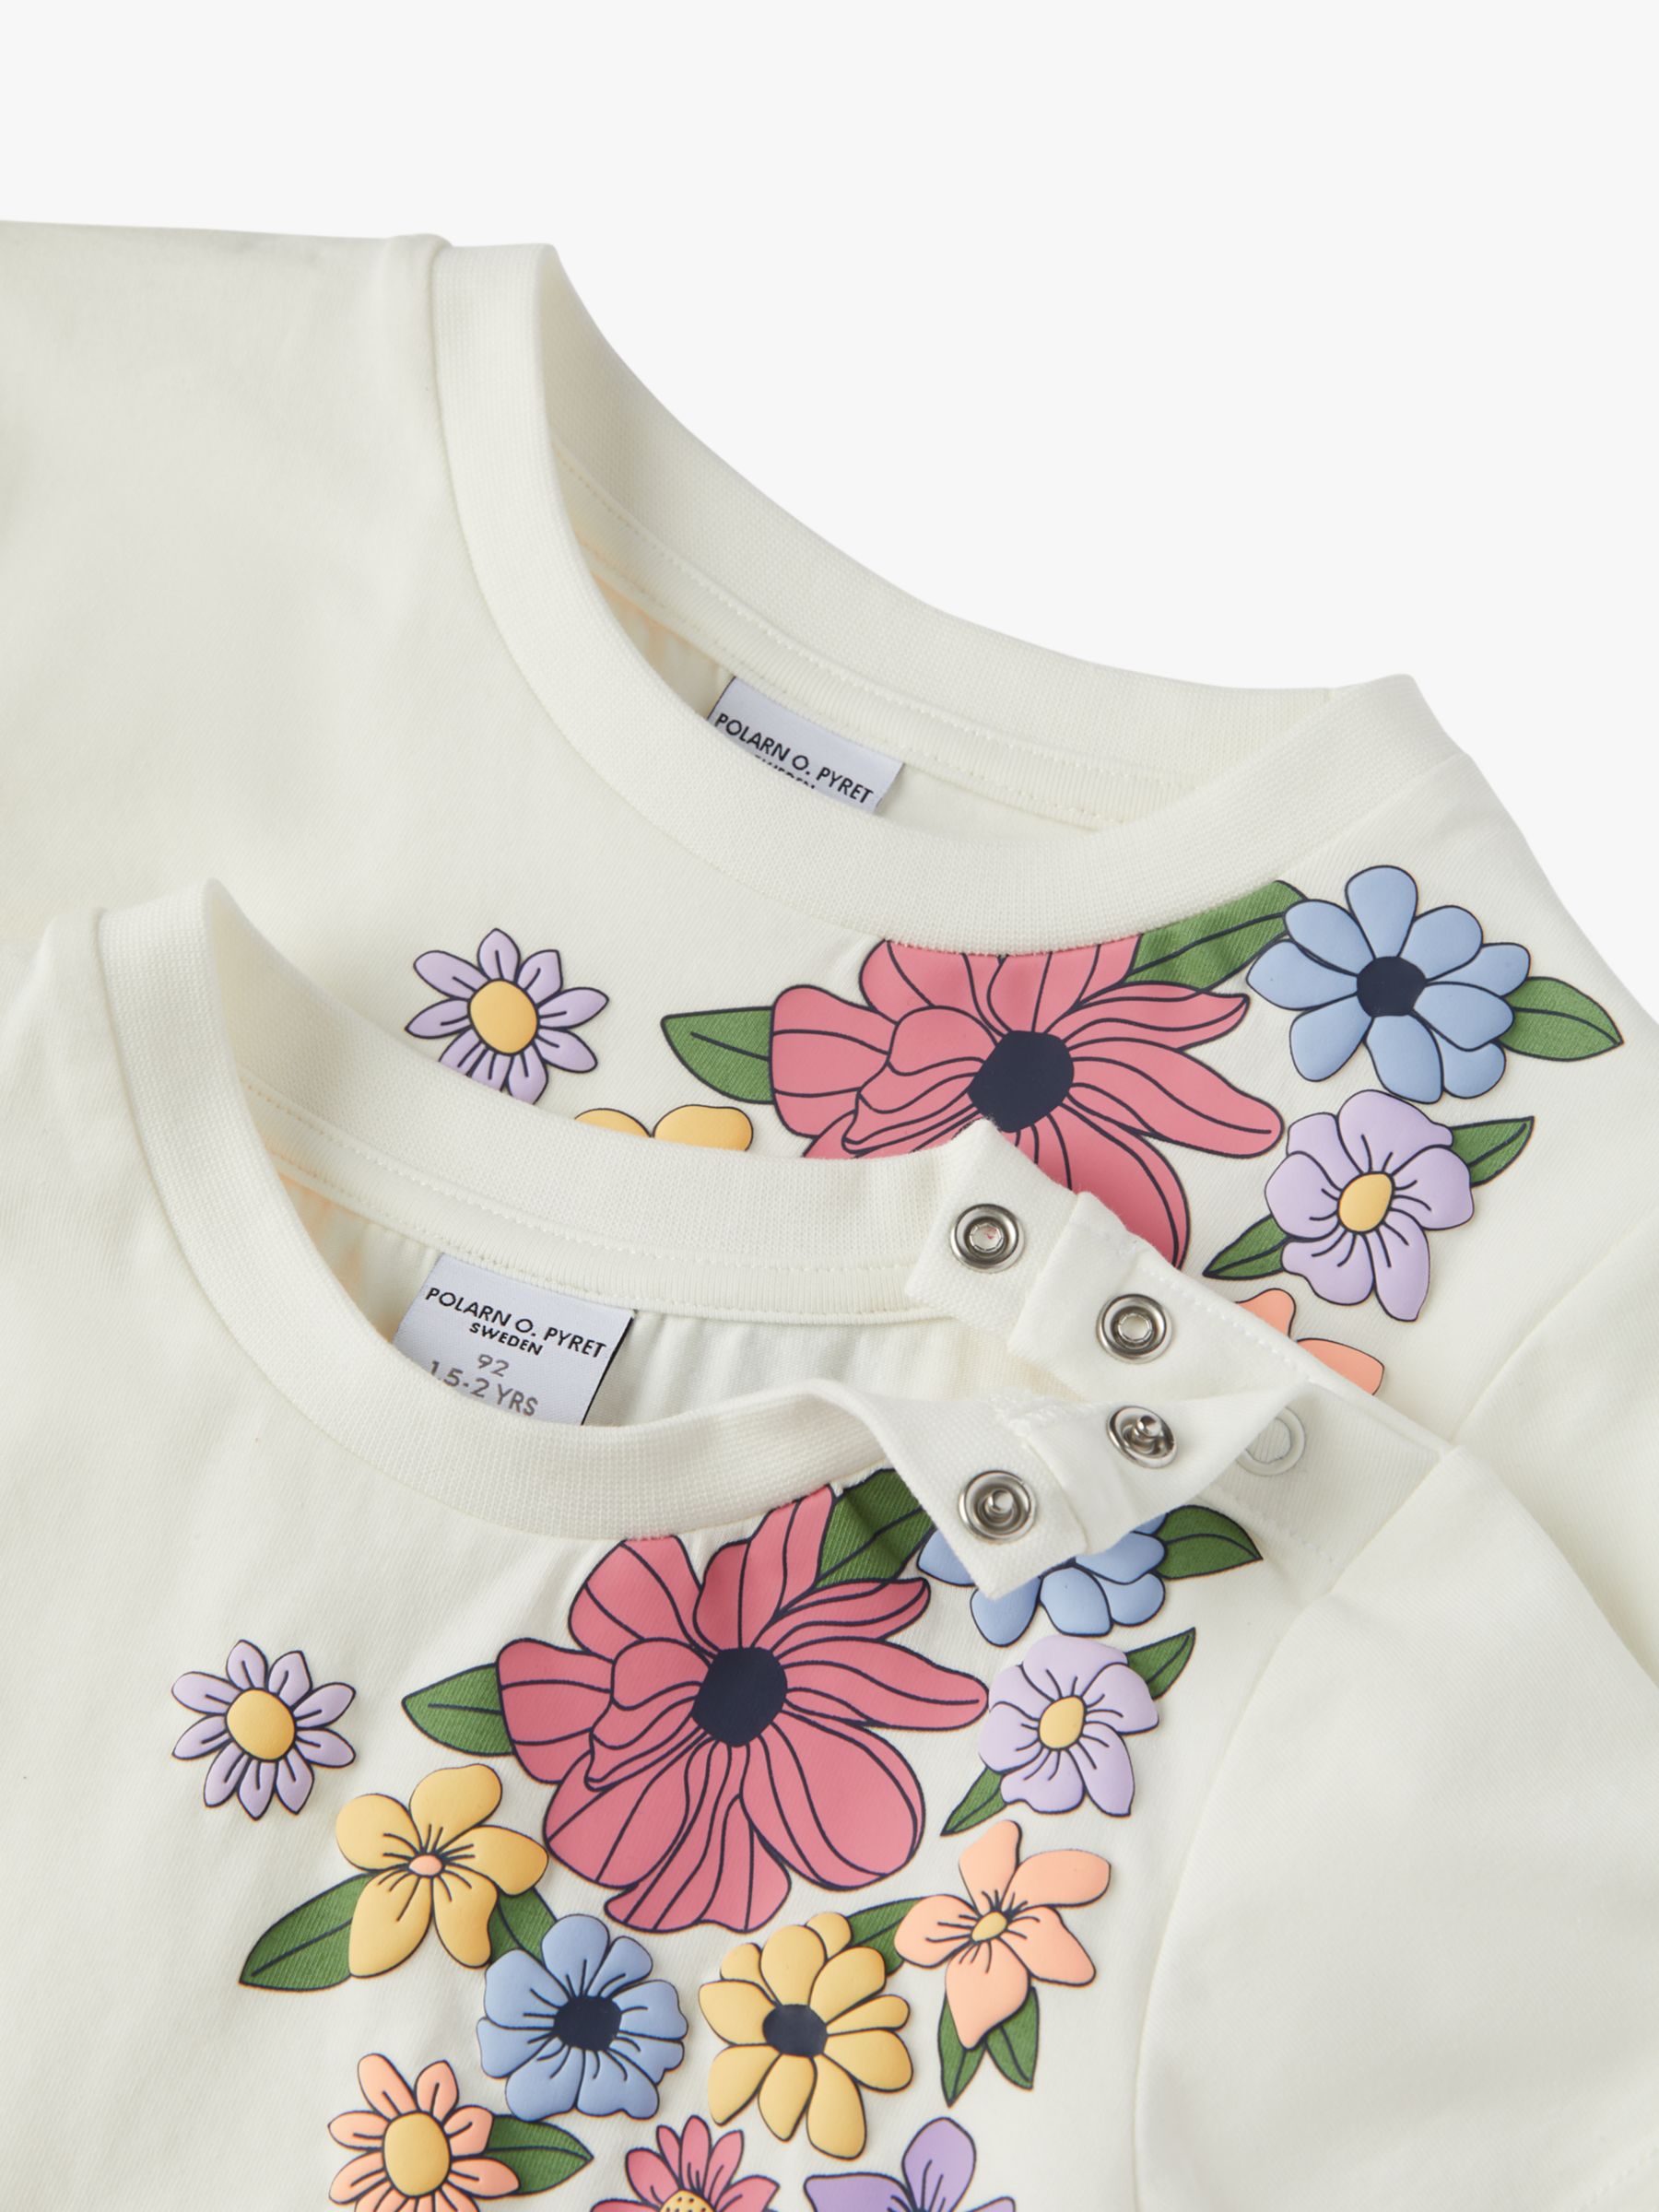 Polarn O. Pyret Kids' Organic Cotton Blend Floral Print T-Shirt, White, 12-18 months